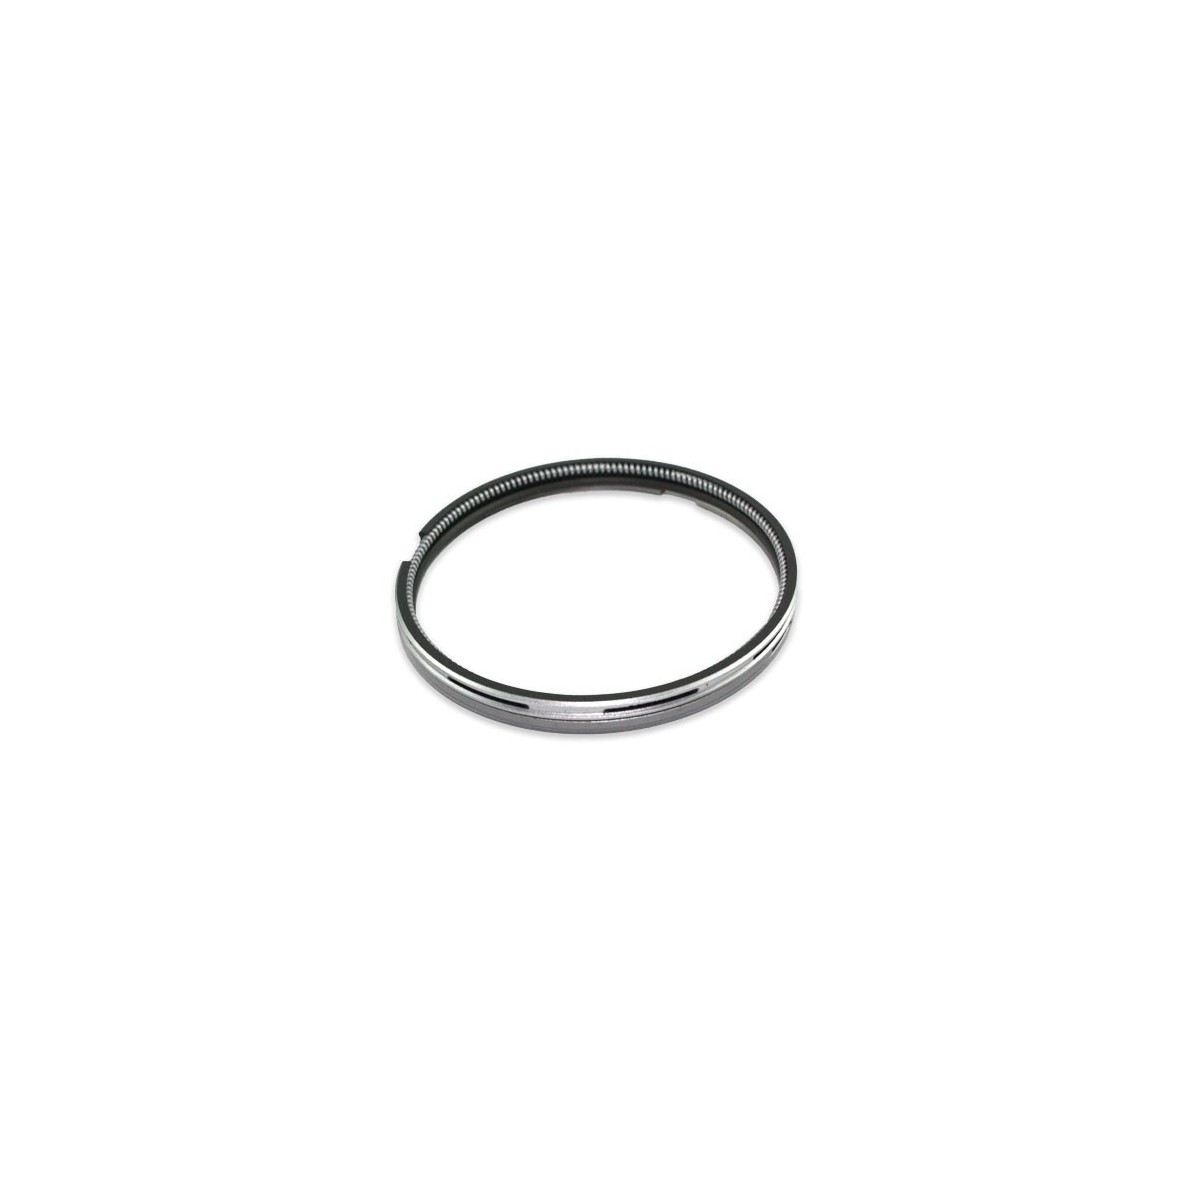 Zestaw pierścieni 82mm Hinomoto N239 82:1.5 x 1.5 x 3 STD